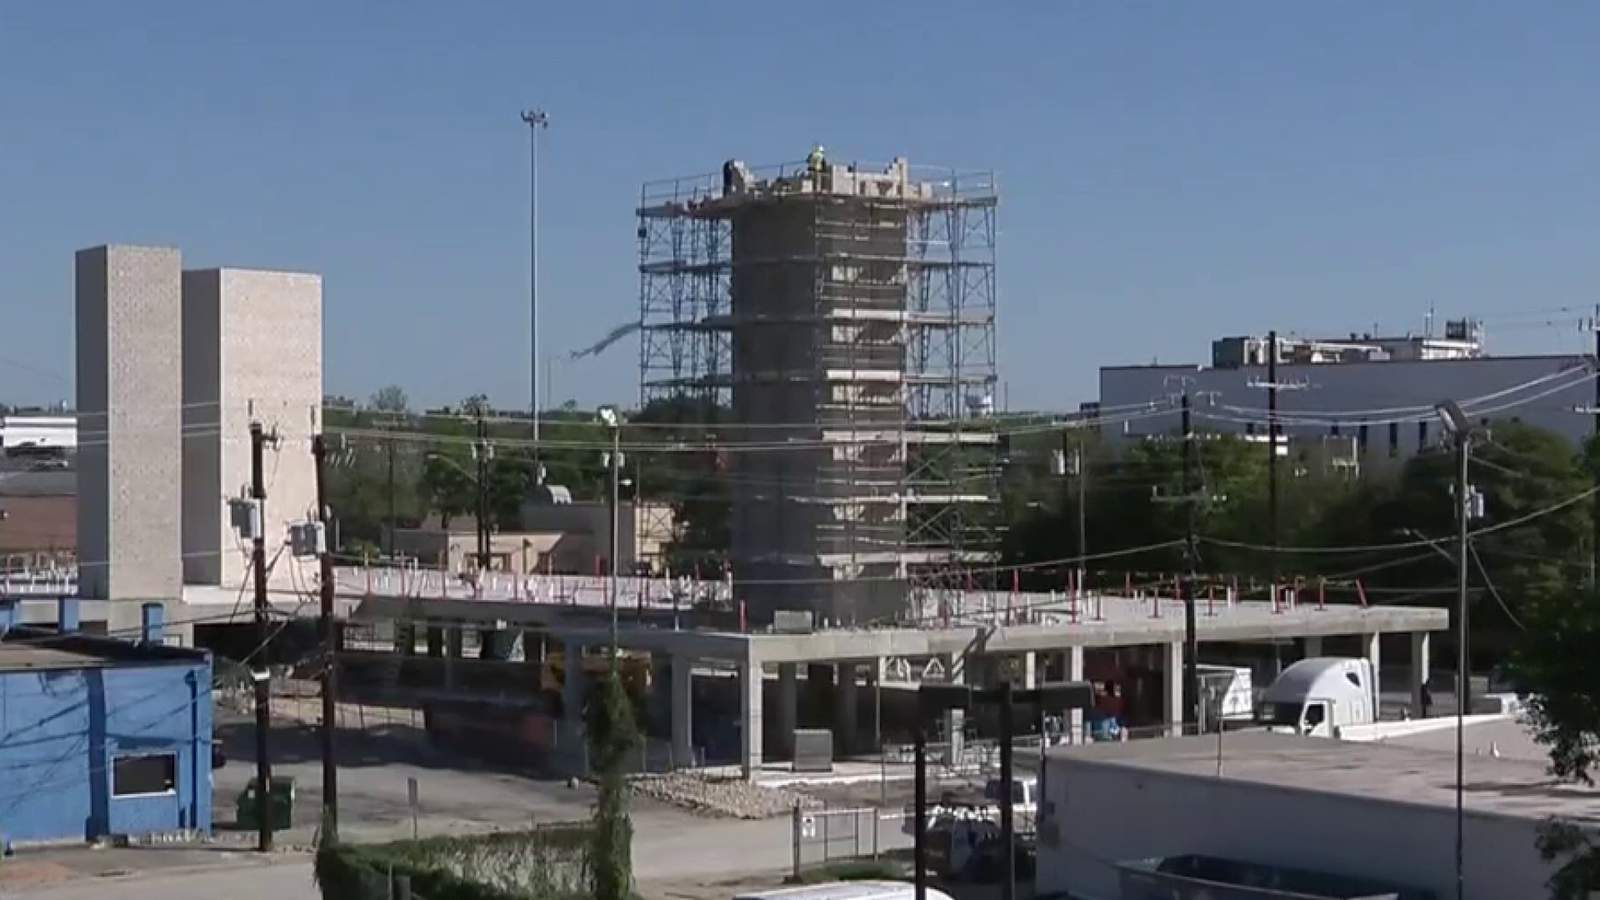 Construction projects continue around the Alamo City amid coronavirus pandemic